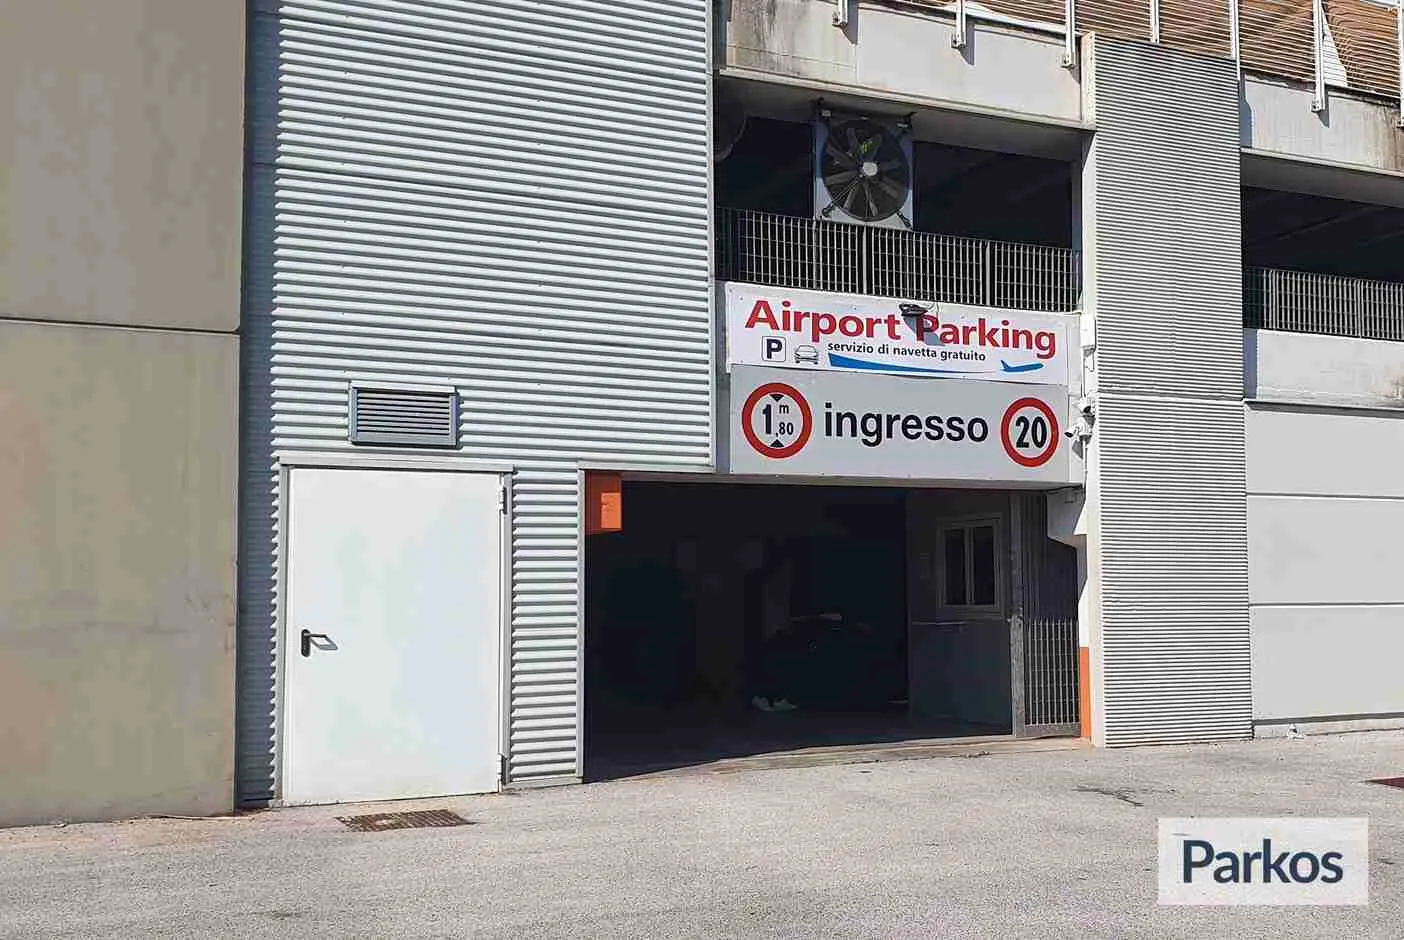 Airport Parking Bari (Paga in parcheggio) - Airport Parking Bari - picture 1